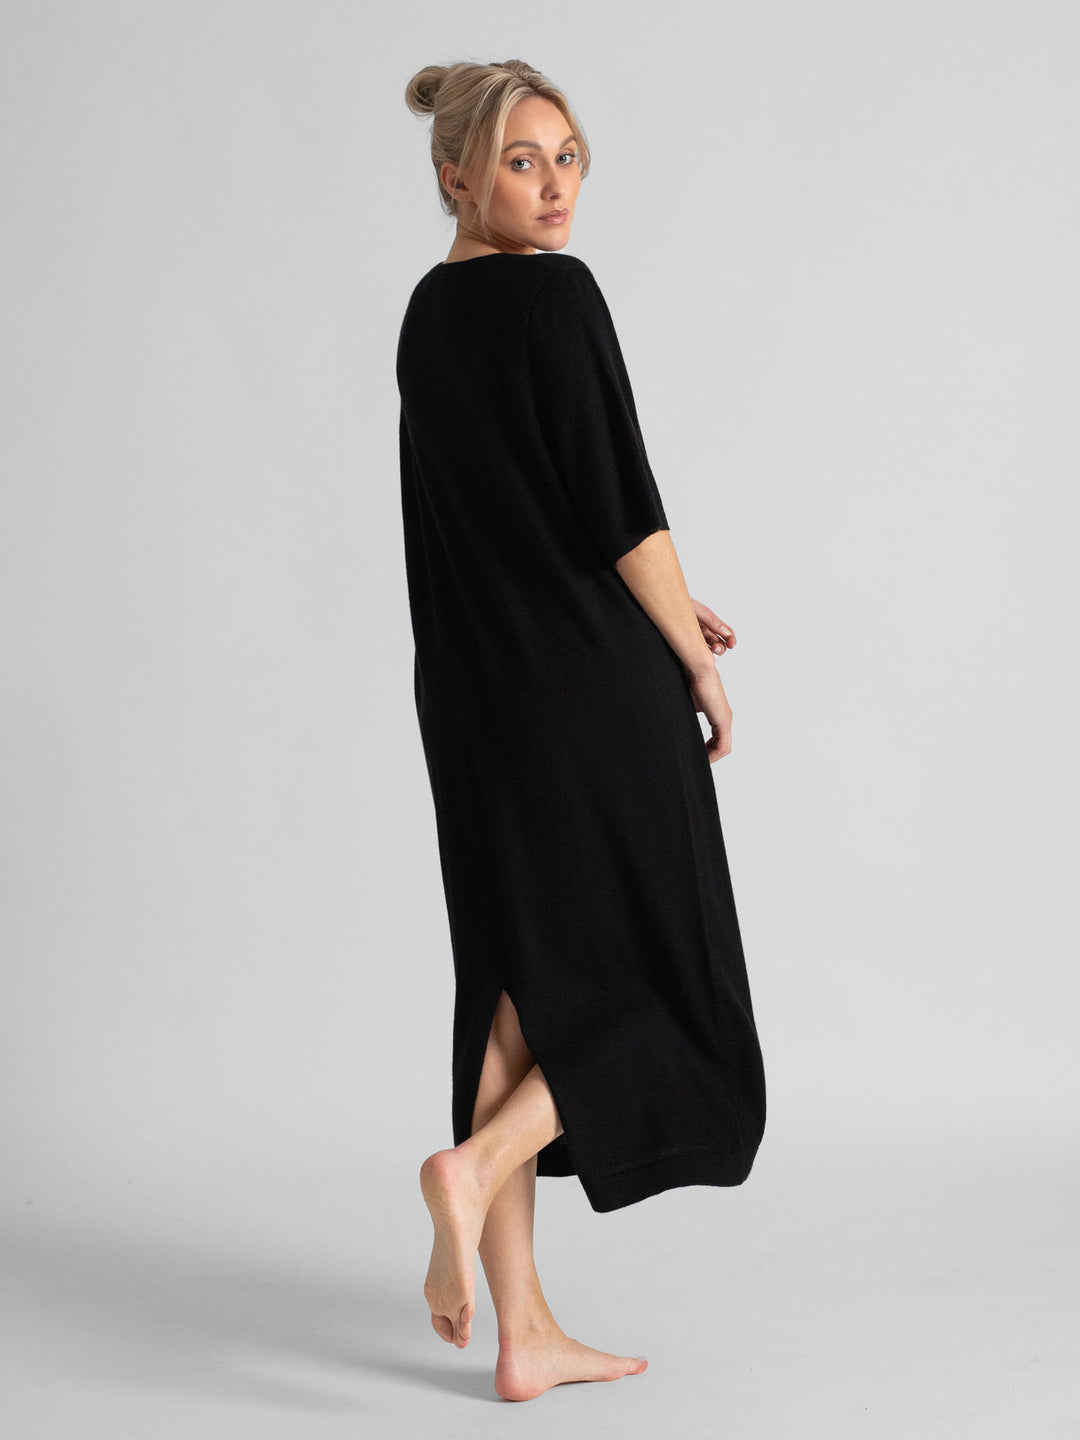 Long, light, thin, cashmere dress "June" in 100% pure cashmere. Color: Black. Scandinavian design by Kashmina.